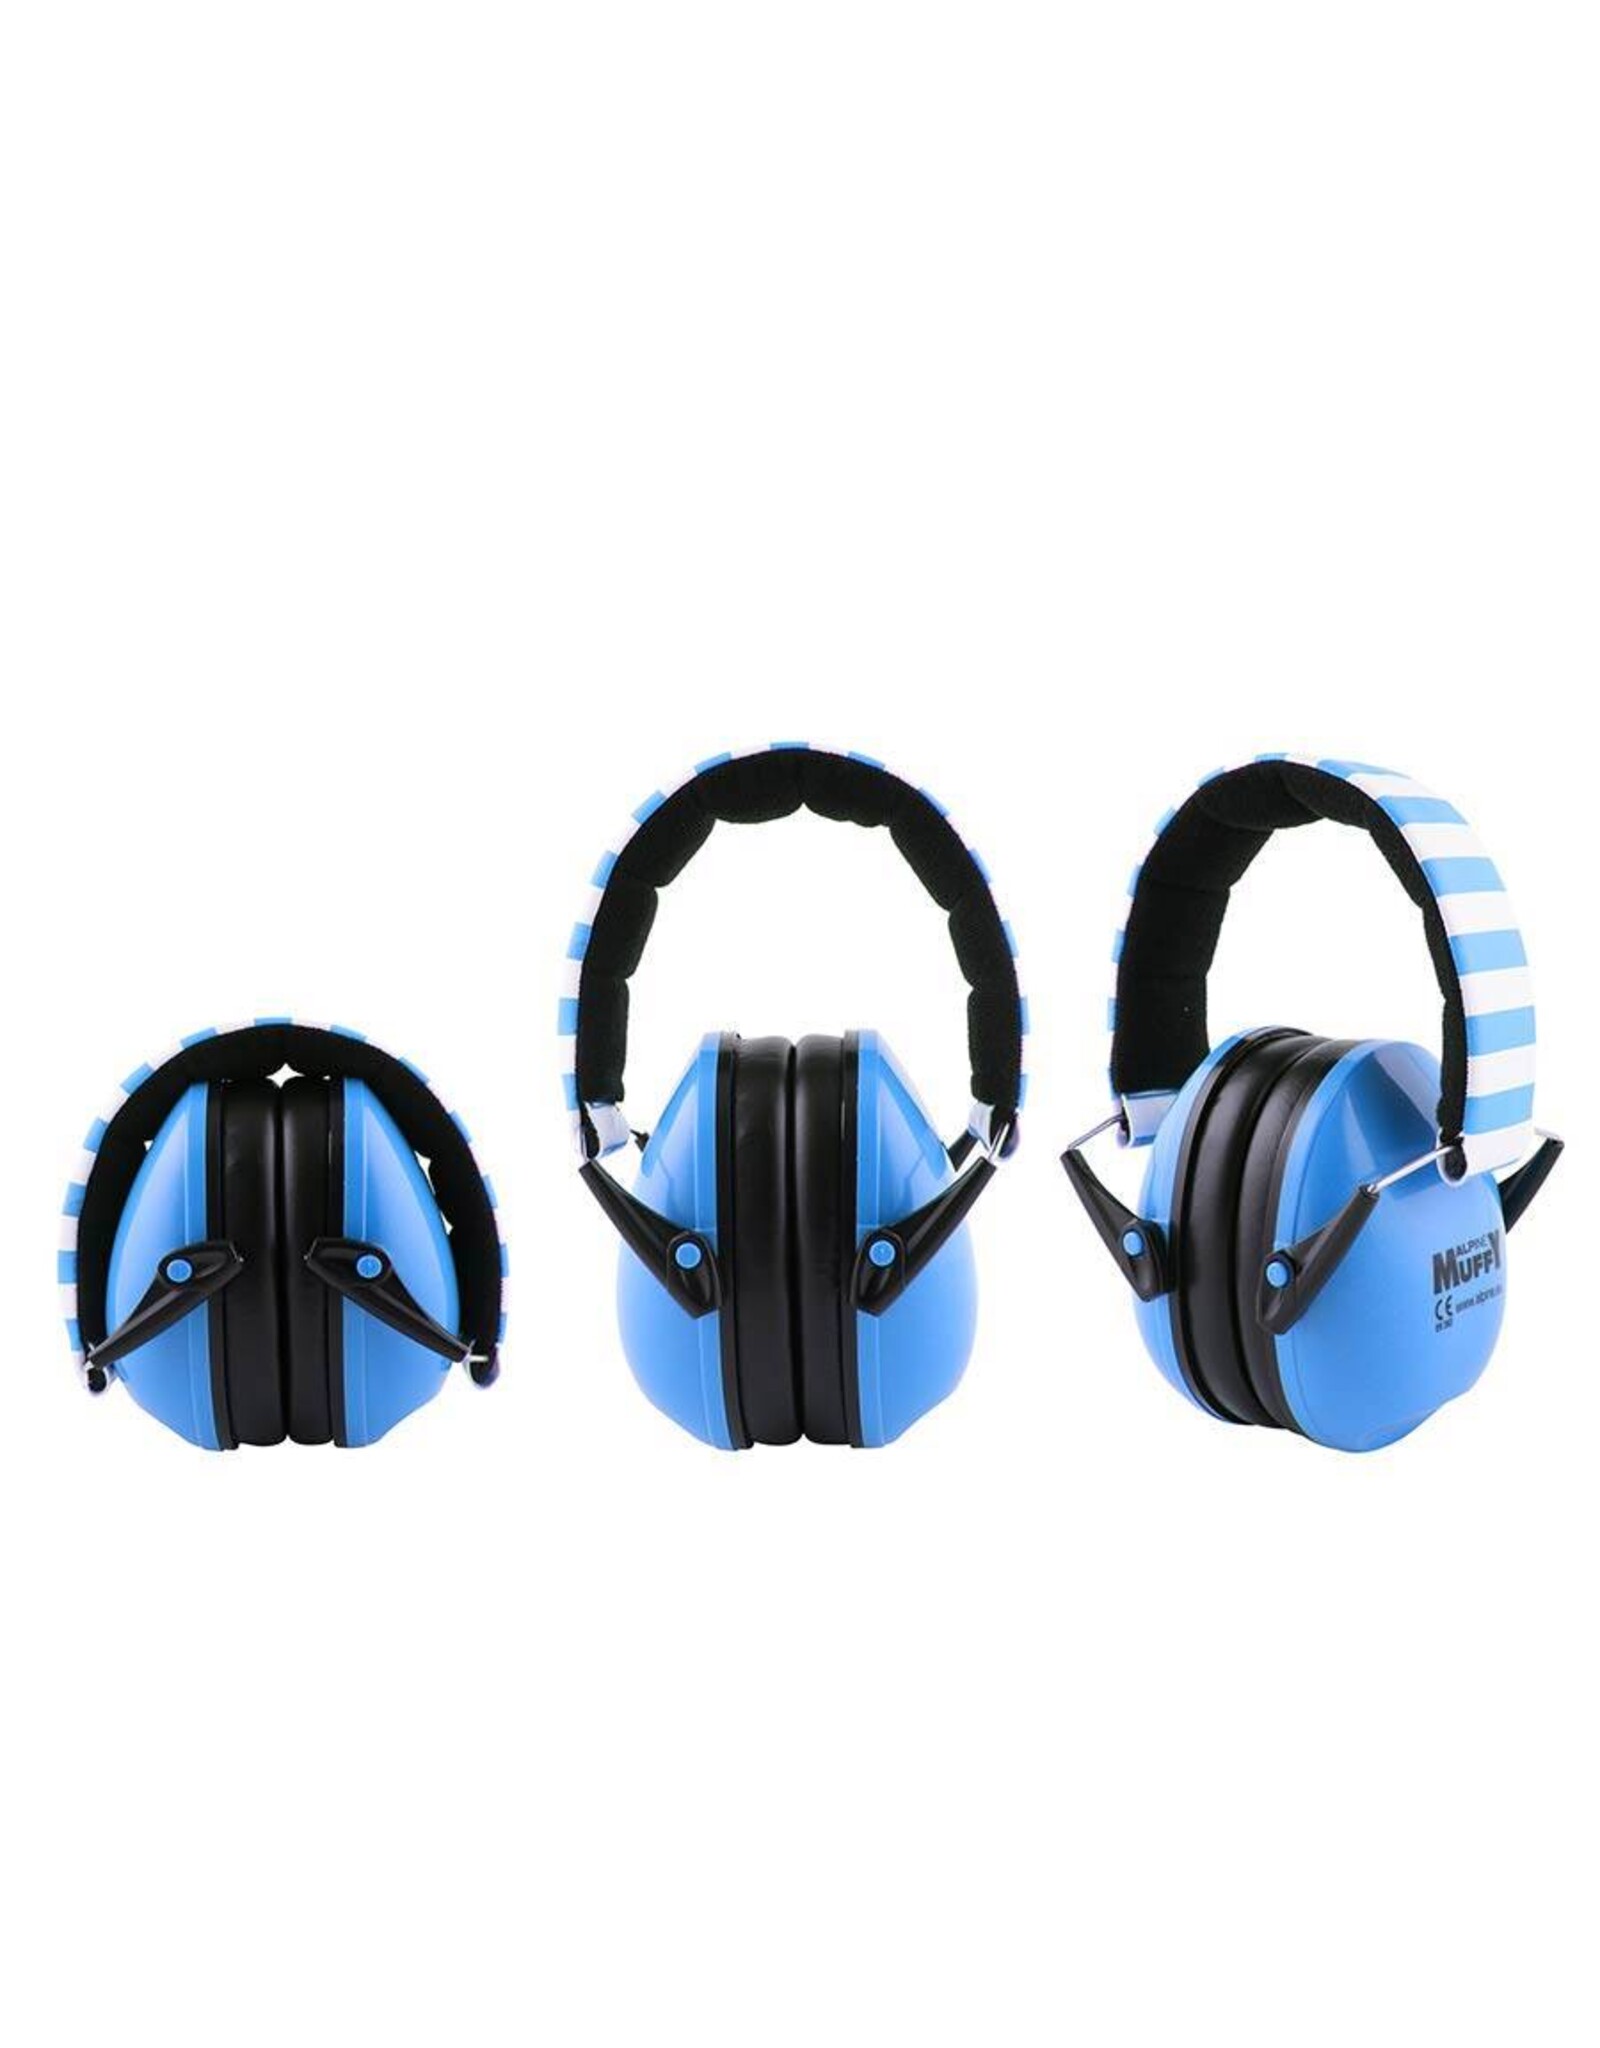 Alpine Muffy earmuffs for children blue ALP-MUF / BU